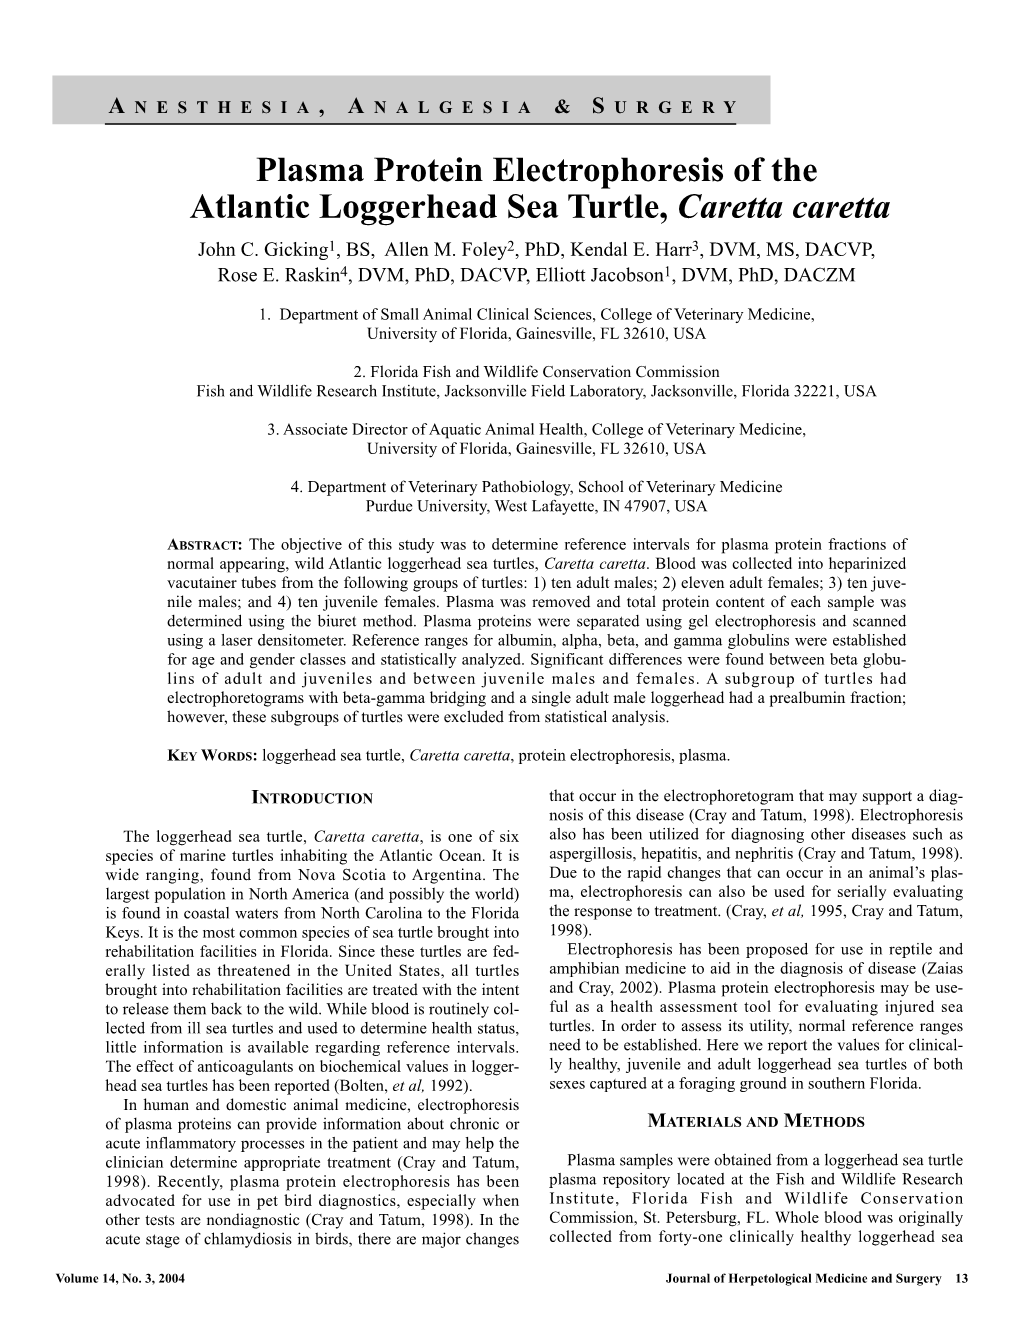 Plasma Protein Electrophoresis of the Atlantic Loggerhead Sea Turtle, Caretta Caretta John C